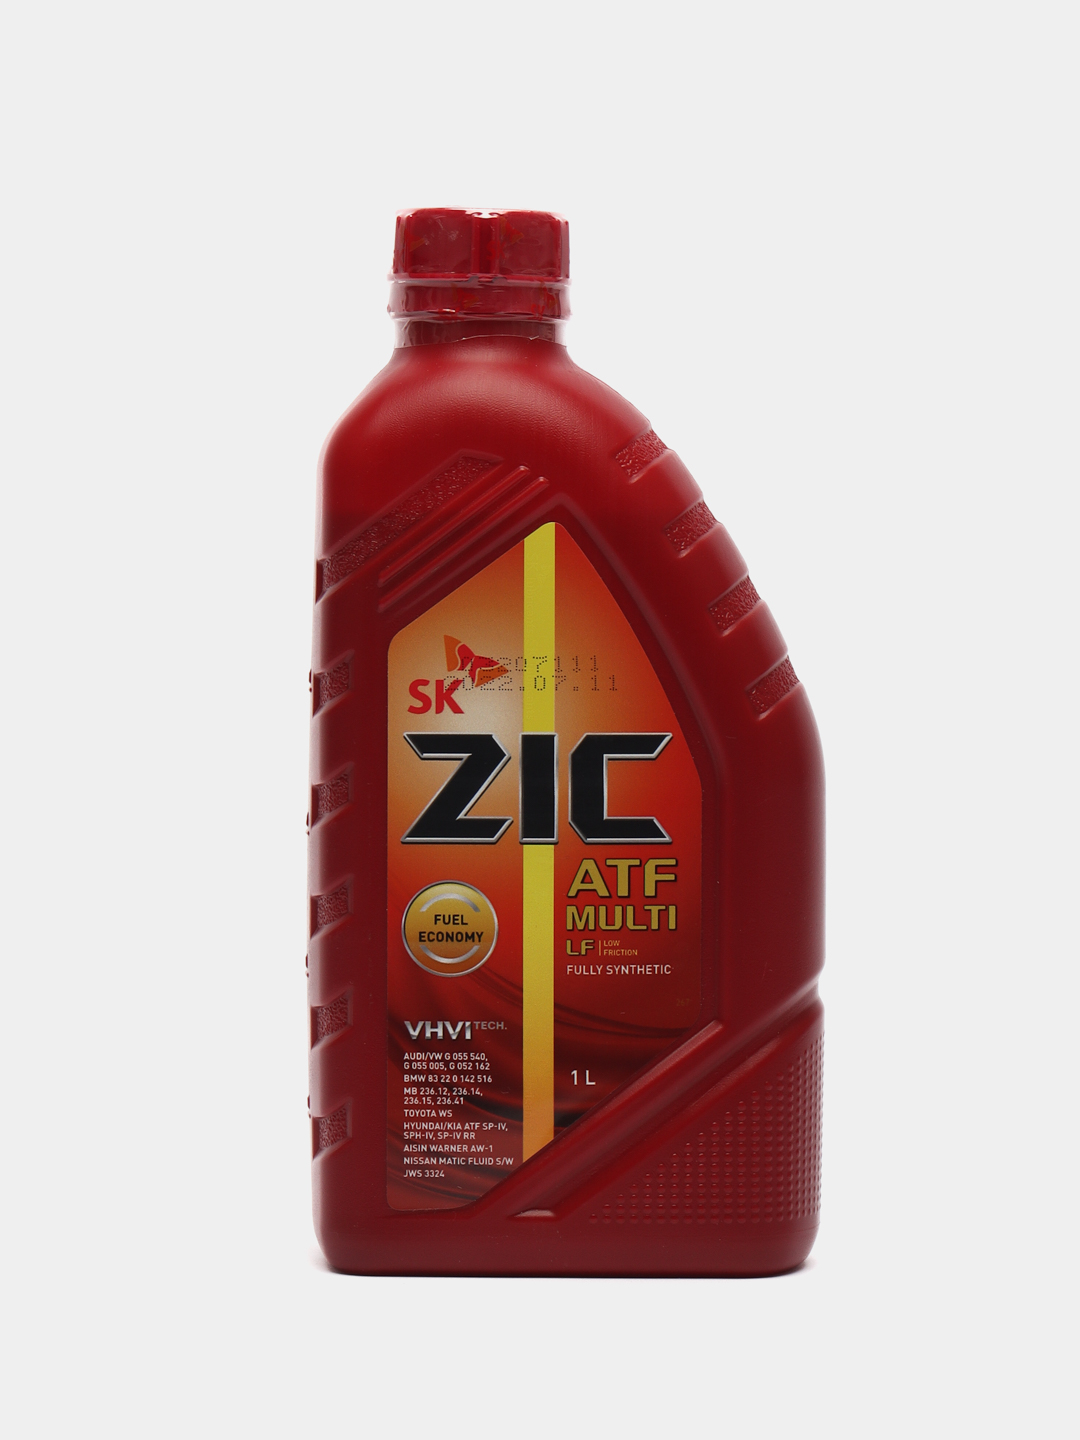 Zic atf отзывы. ZIC ATF Multi LF. ZIC ATF Multi LF цвет. Масло ZIC ATF Multi класс вязкости. ZIC ATF Multi какого цвета.